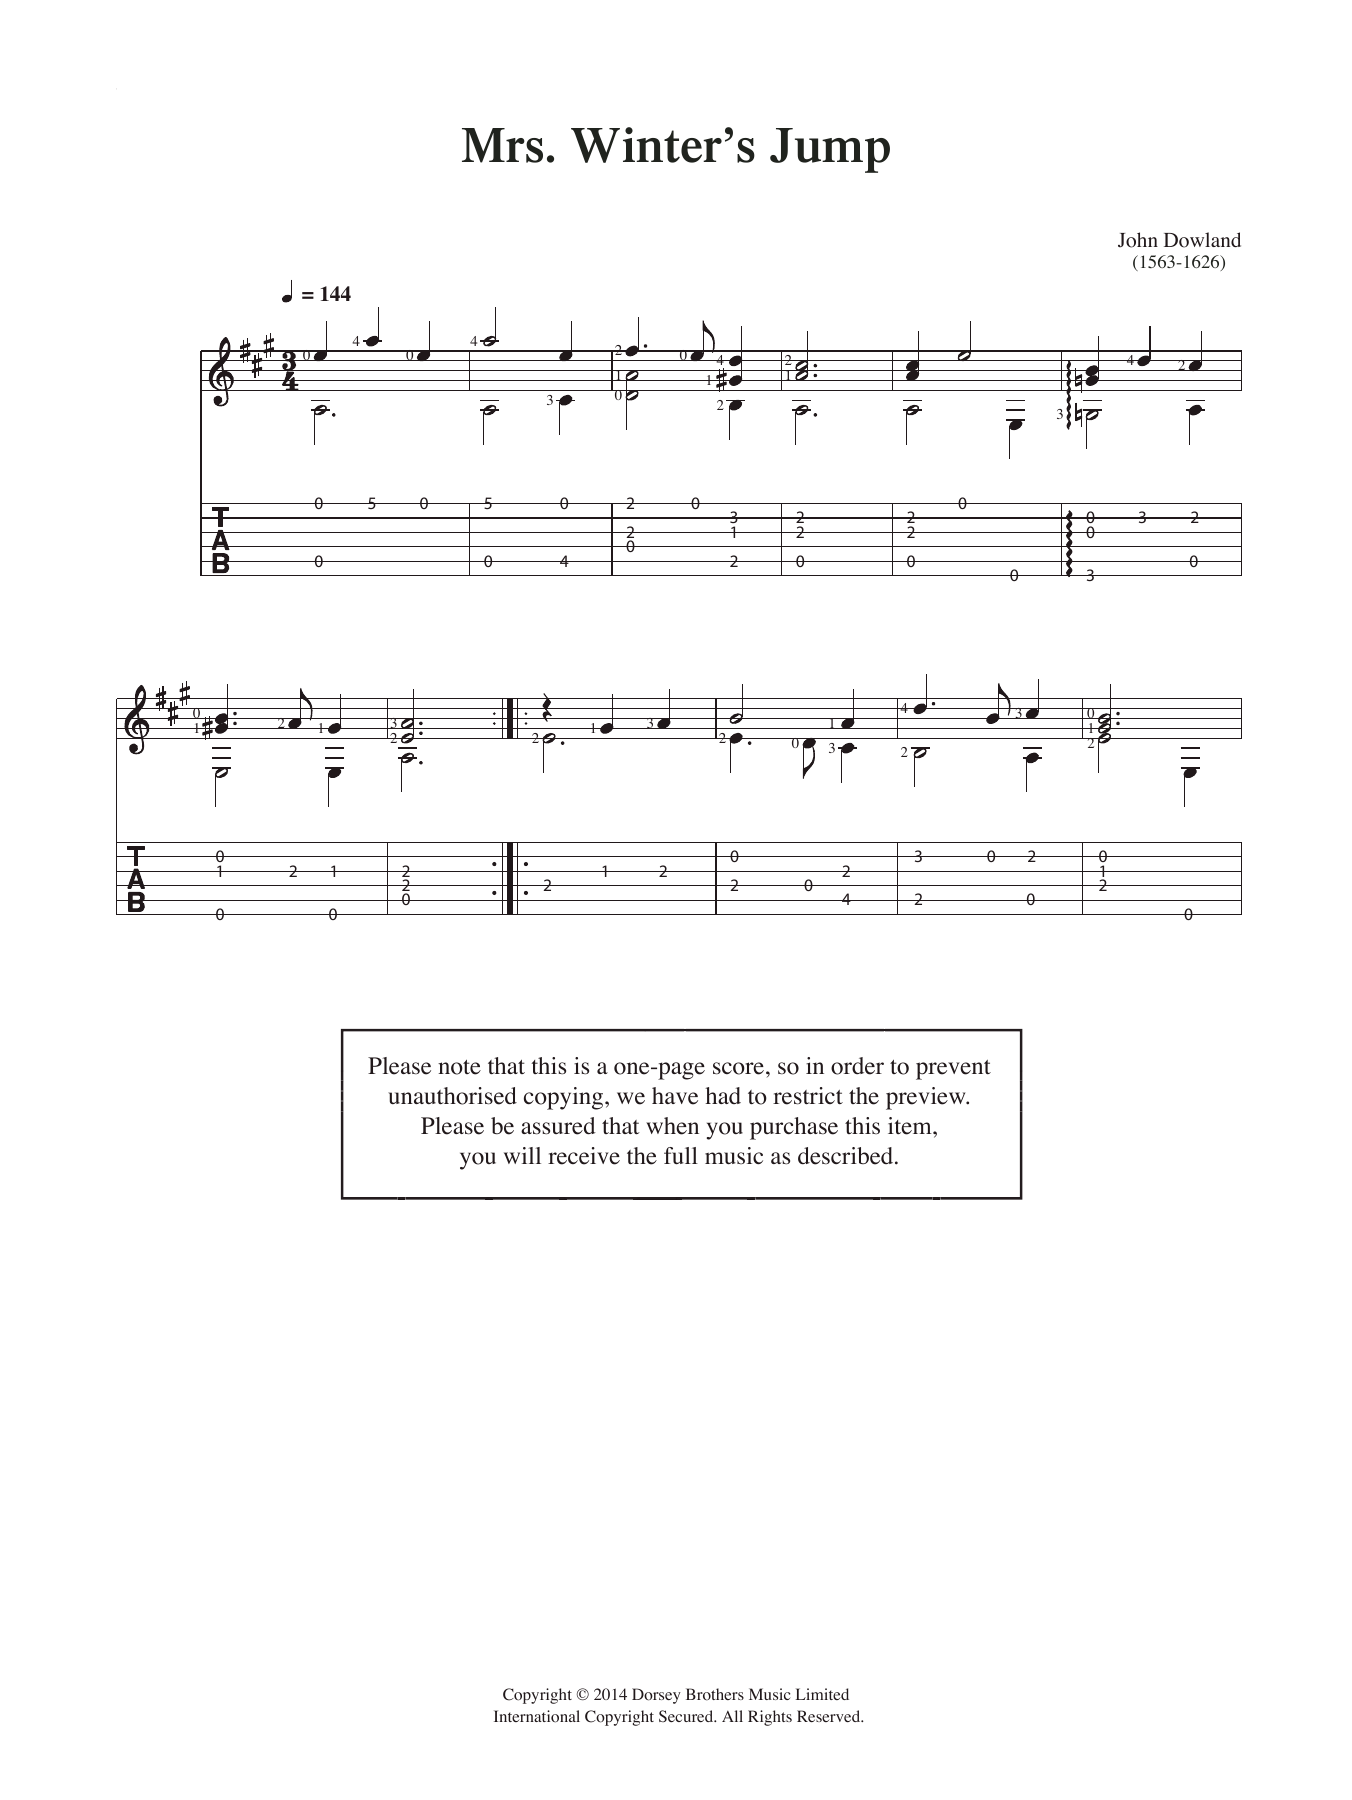 John Dowland Mrs Winter's Jump Sheet Music Notes & Chords for Guitar - Download or Print PDF